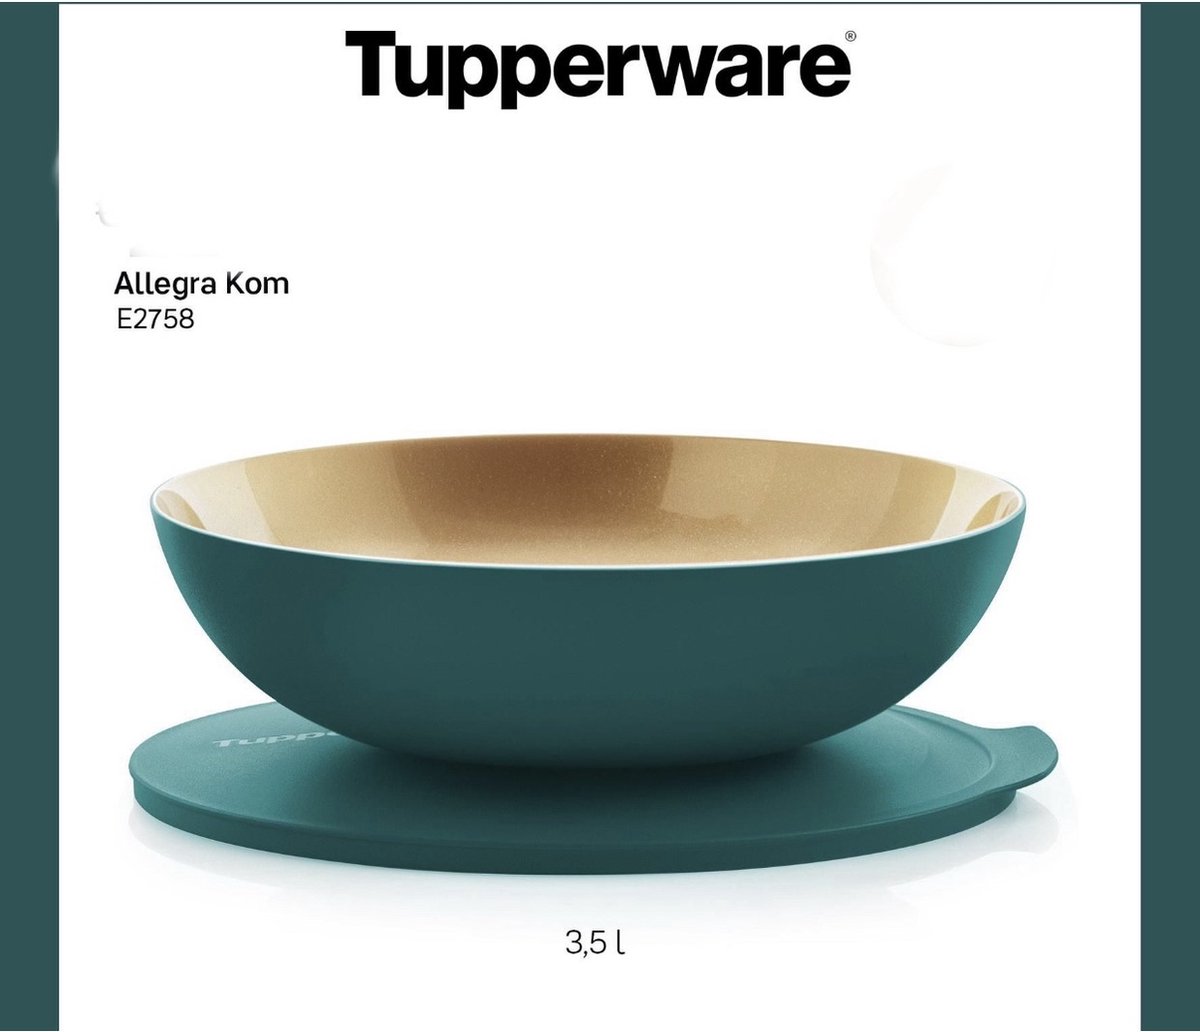 Tupperware Allegra kom 3.5L